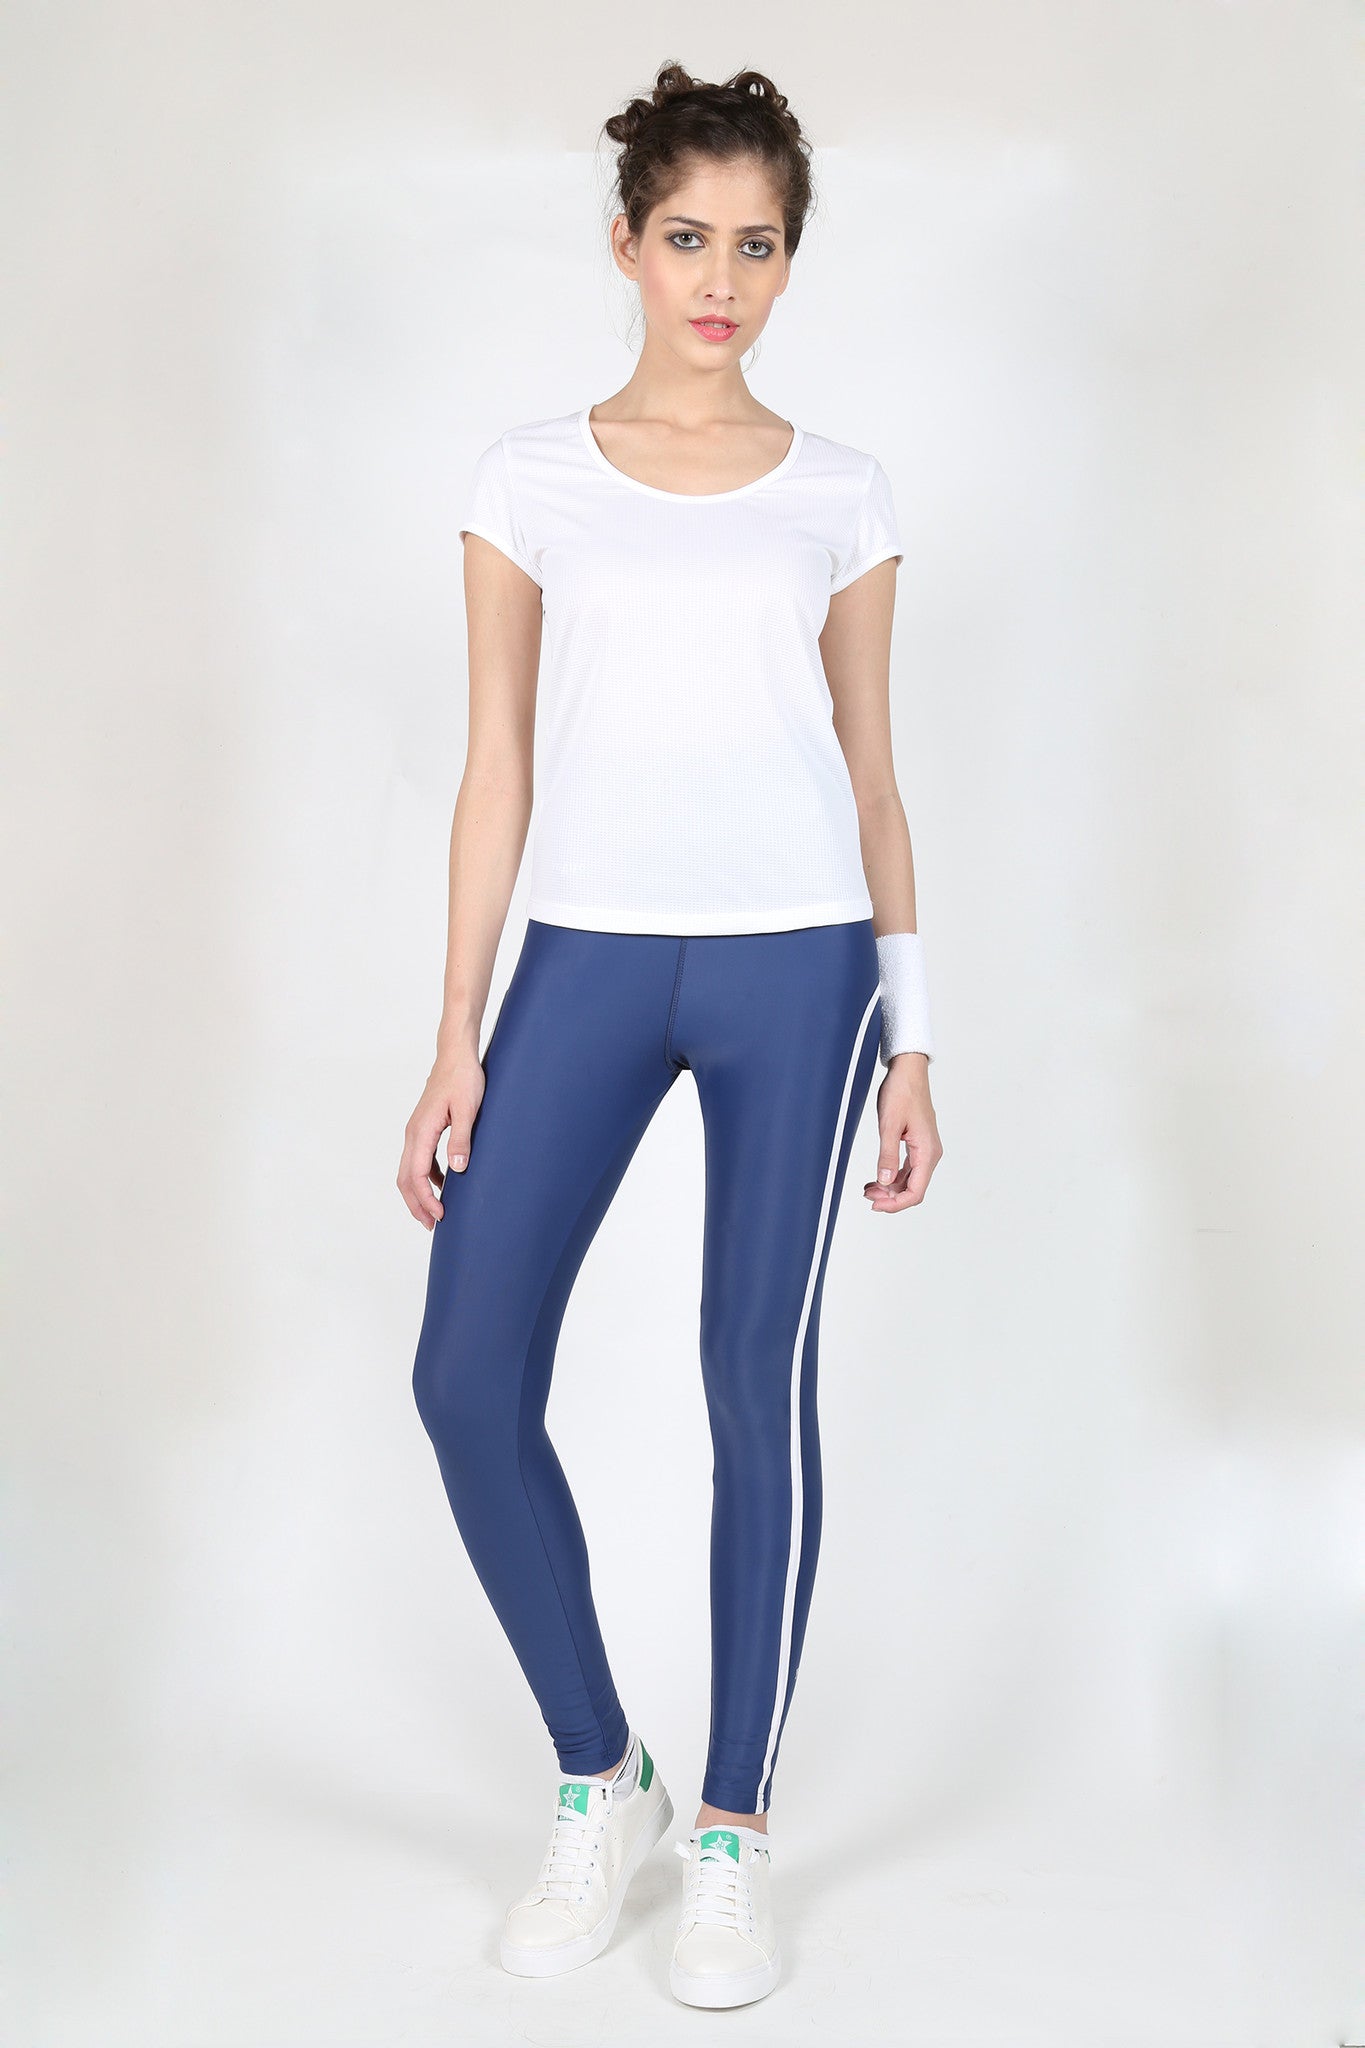 Zathe Navy Blue and White Stripes Yoga Leggings for Women with